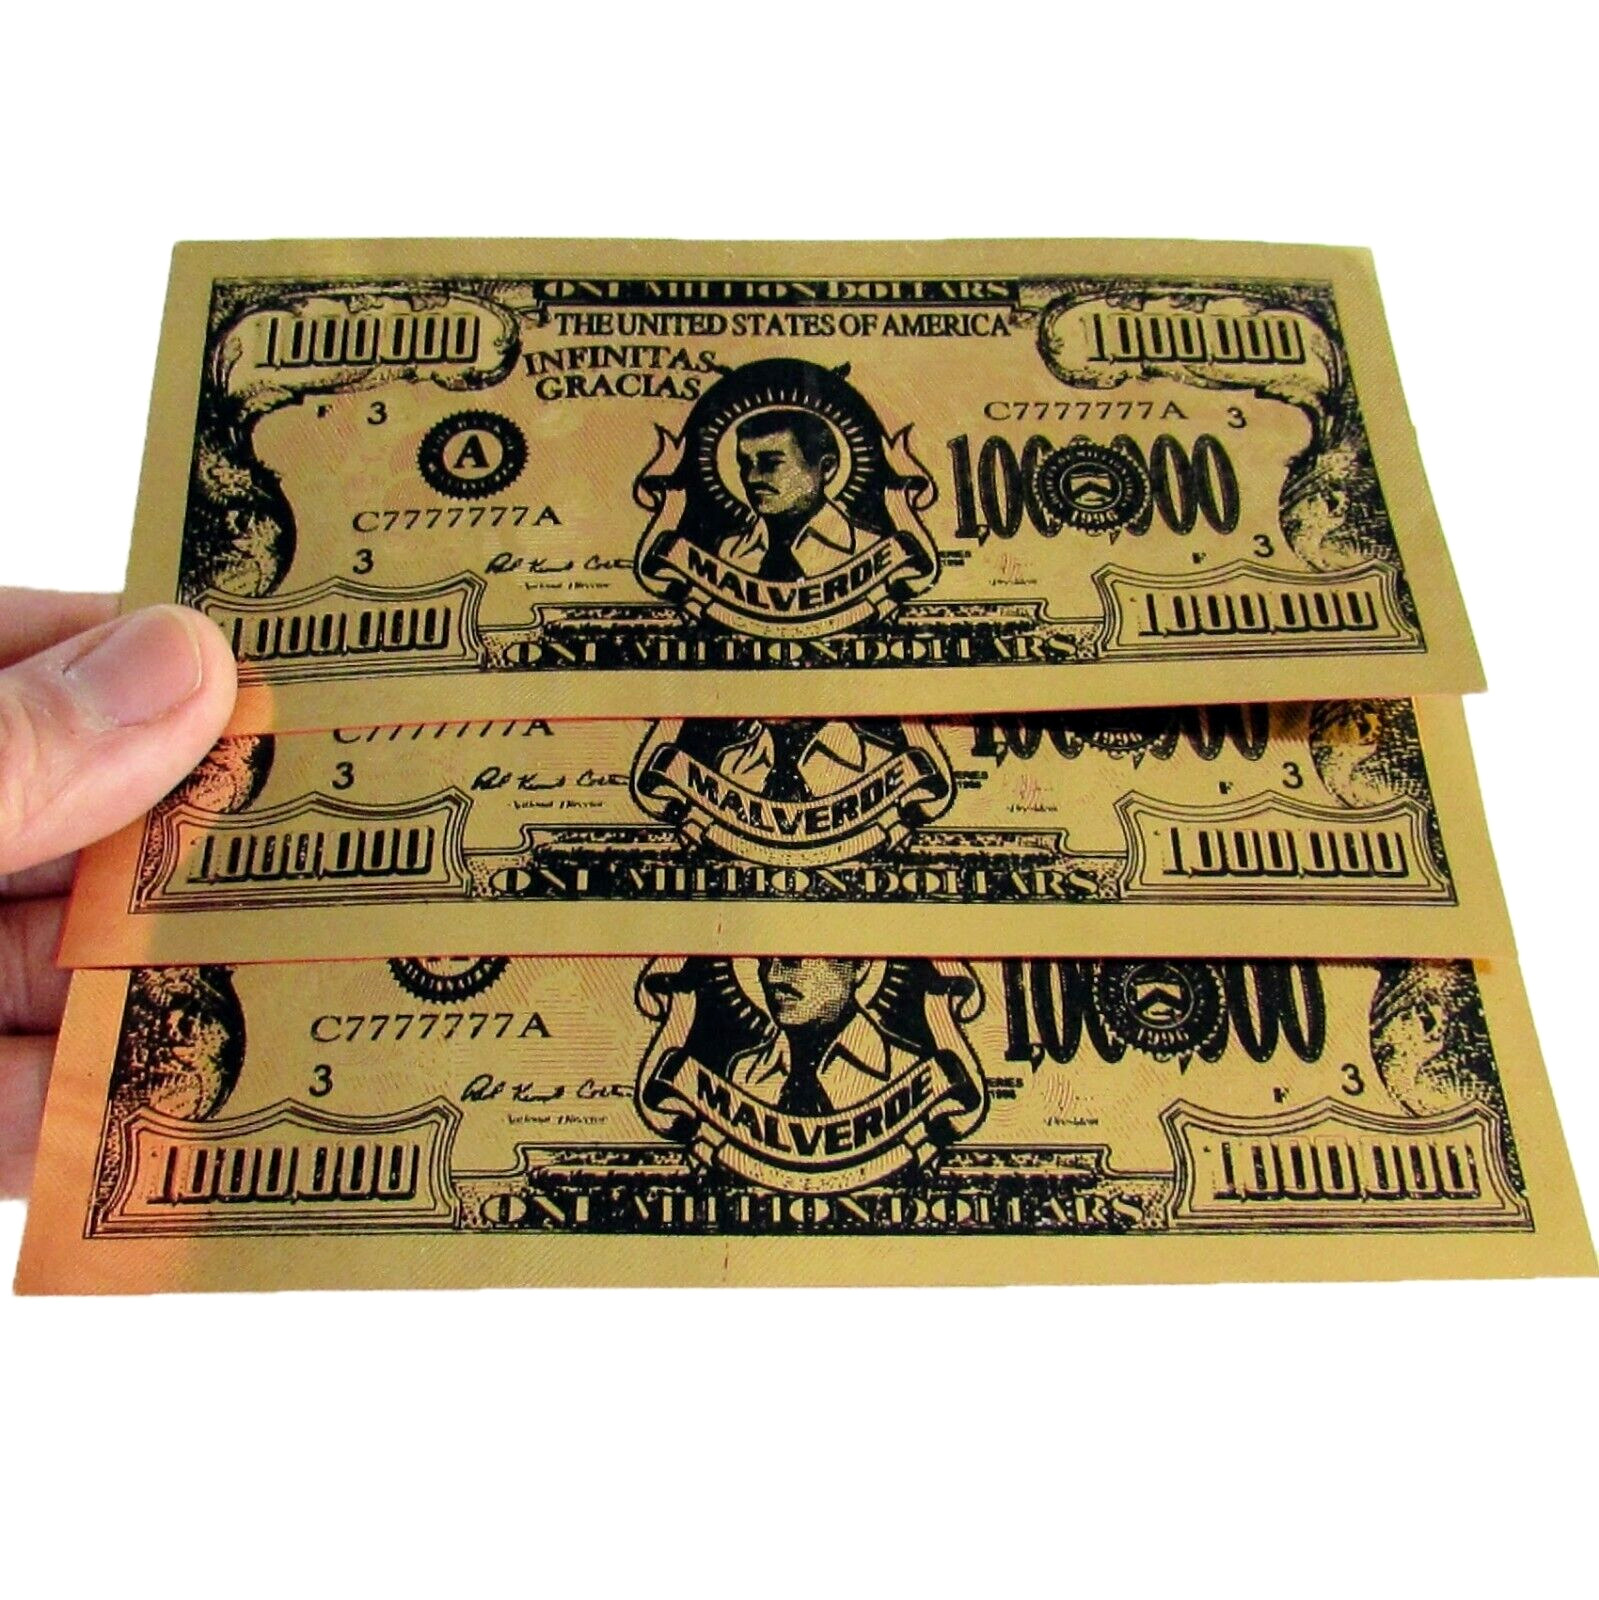 3 pcs Jesus Malverde Billetes de Millon / Malverde Million Dollar Prayer Bills